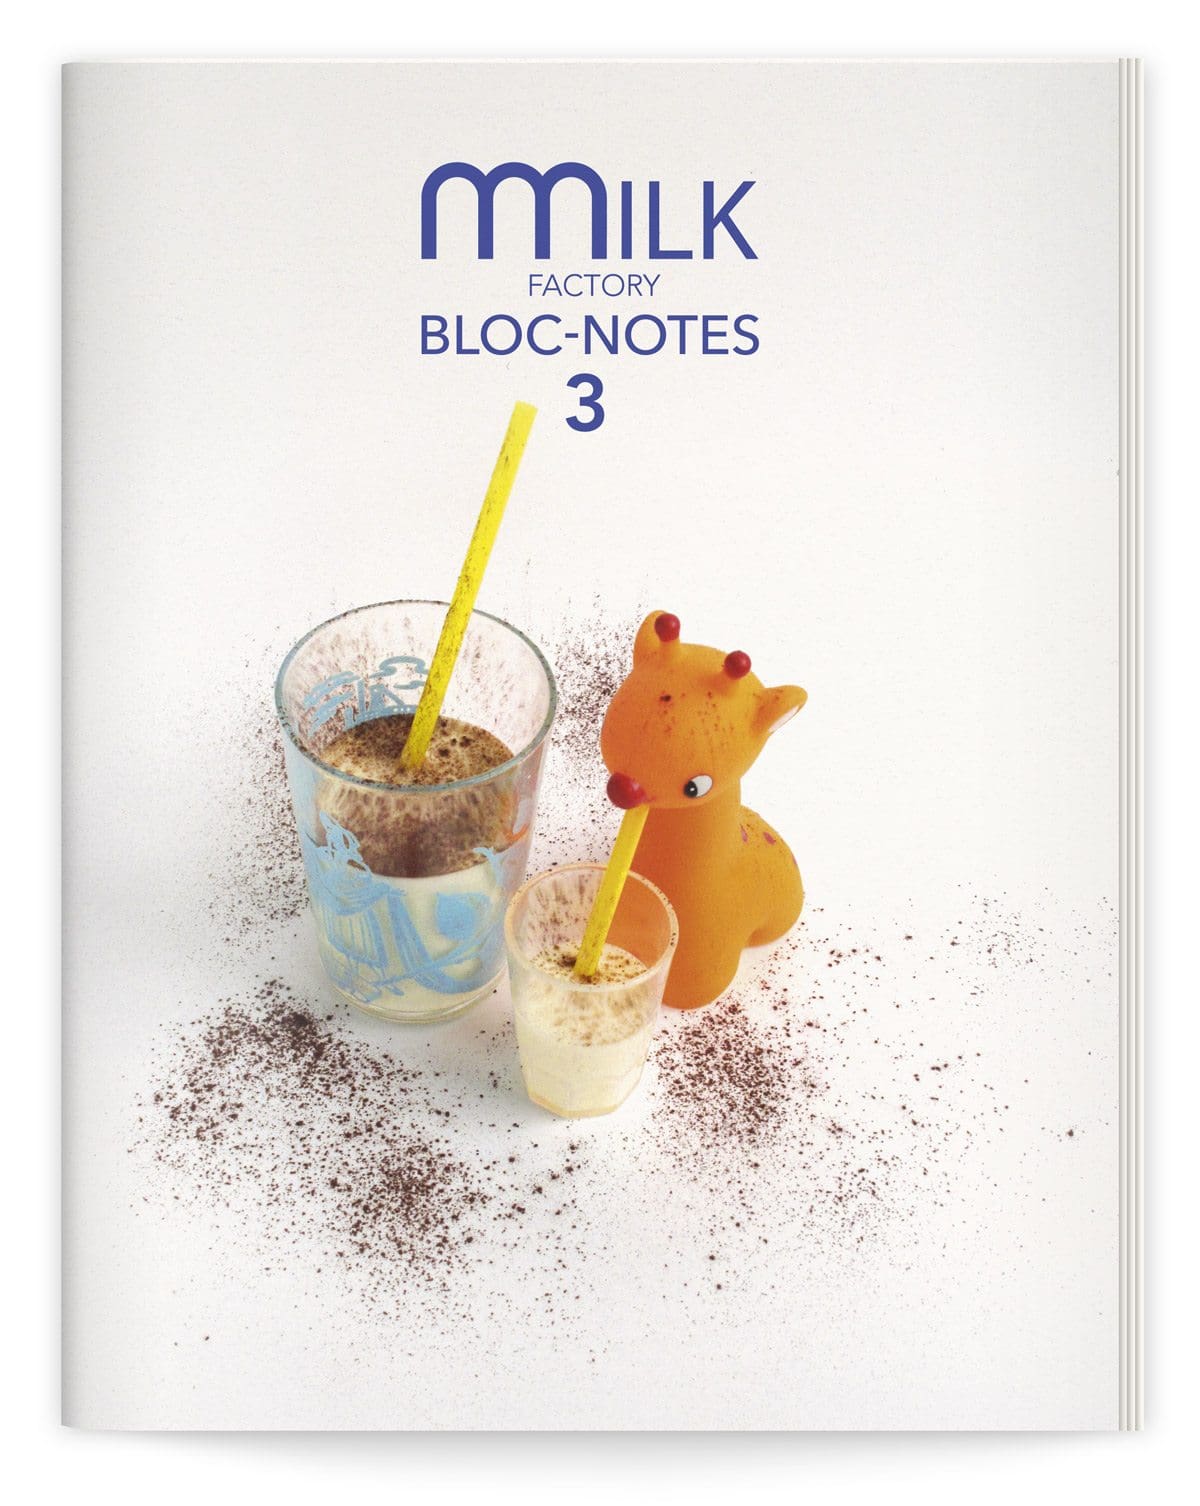 bloc-notes 3 milk factory couverture photo martine camillieri